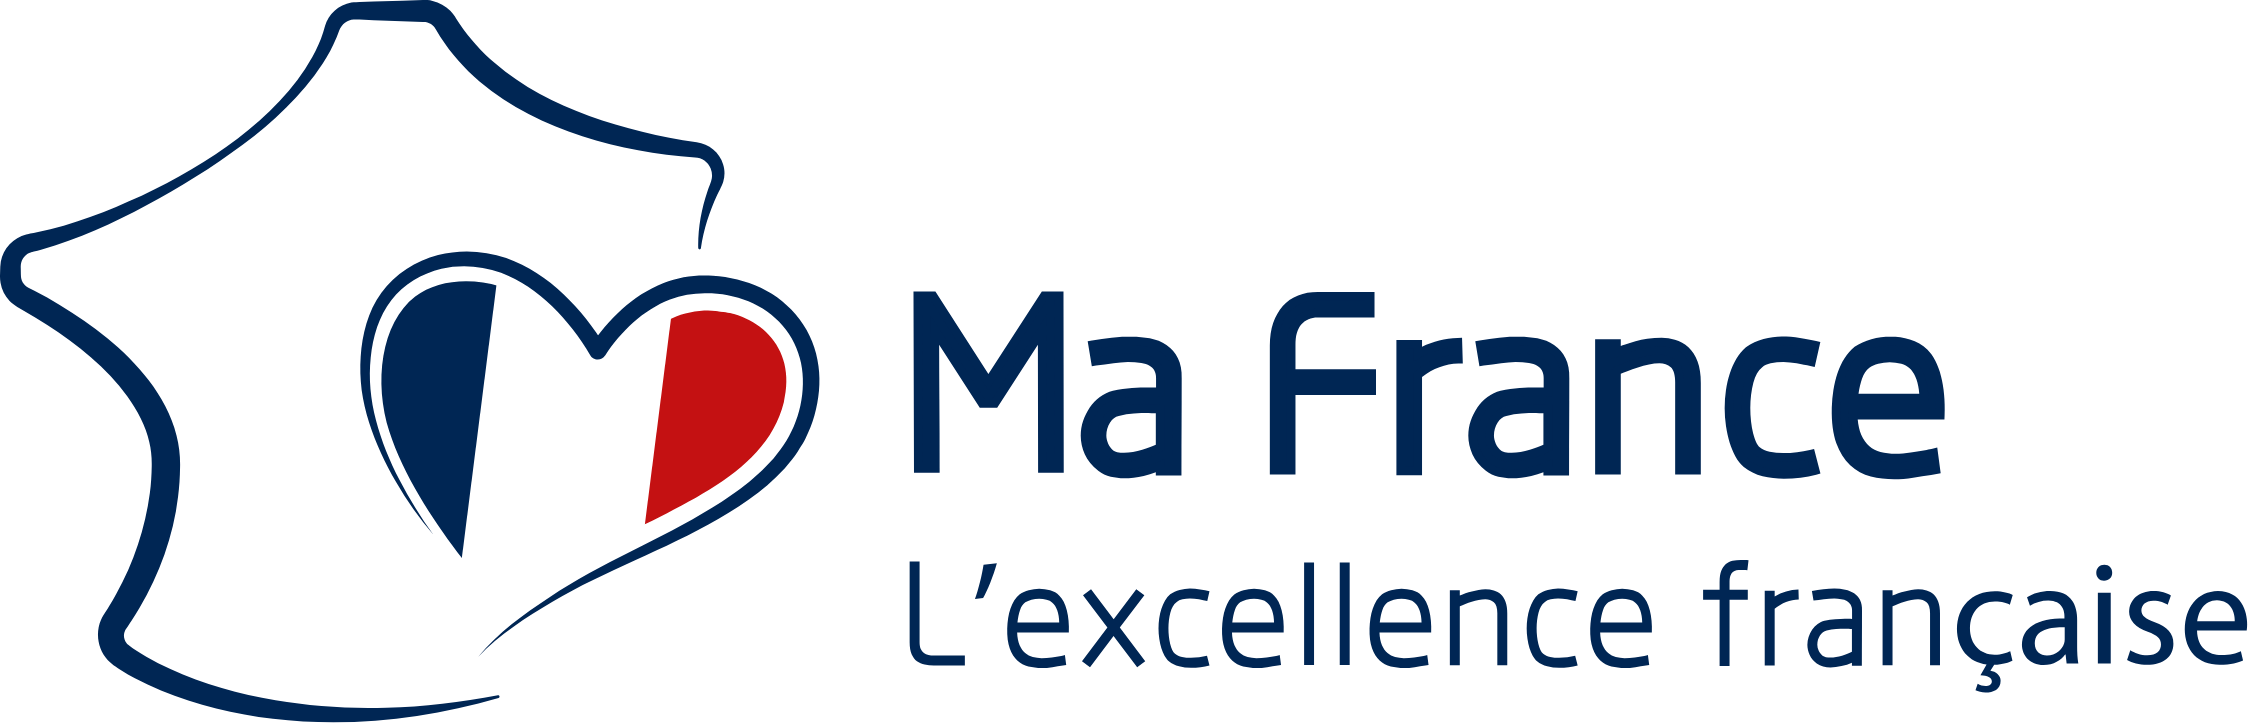 iSpiderMedia partner Ma France logo